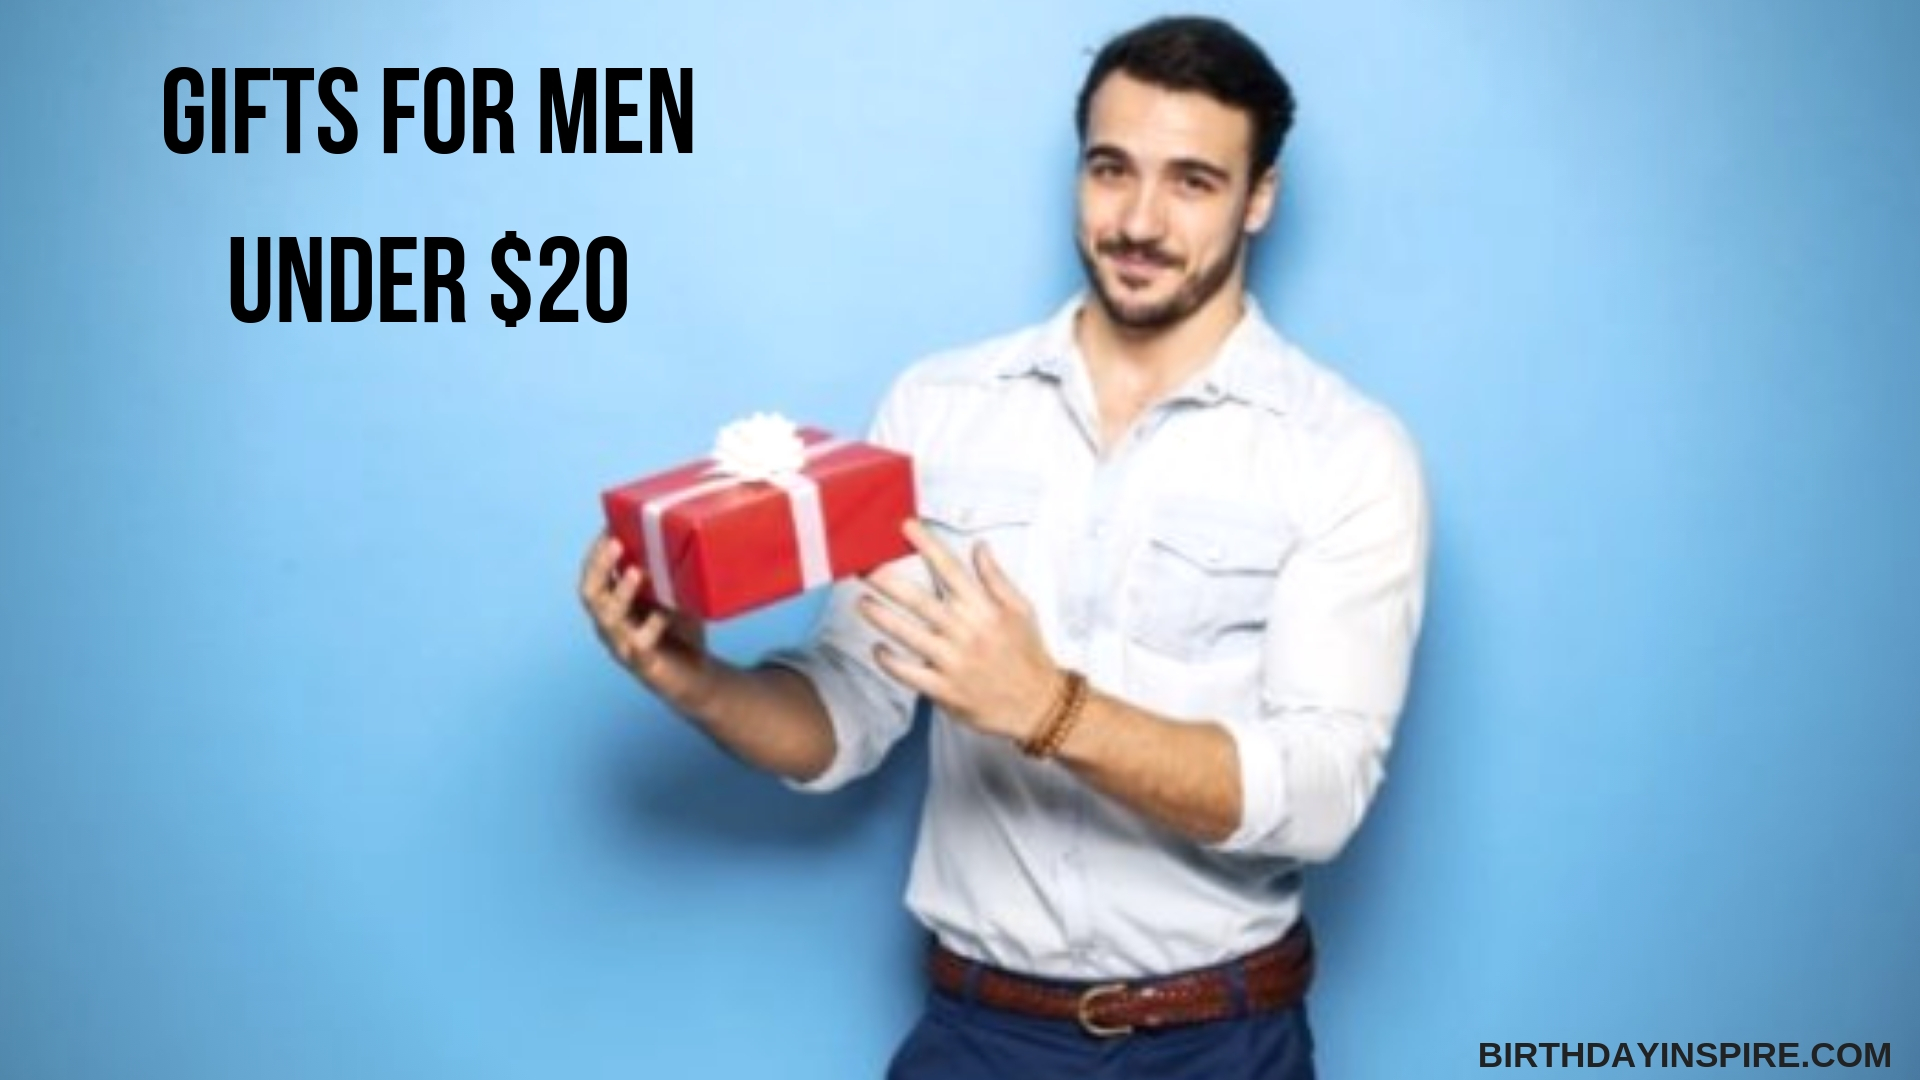 GIFTS FOR MEN UNDER $20